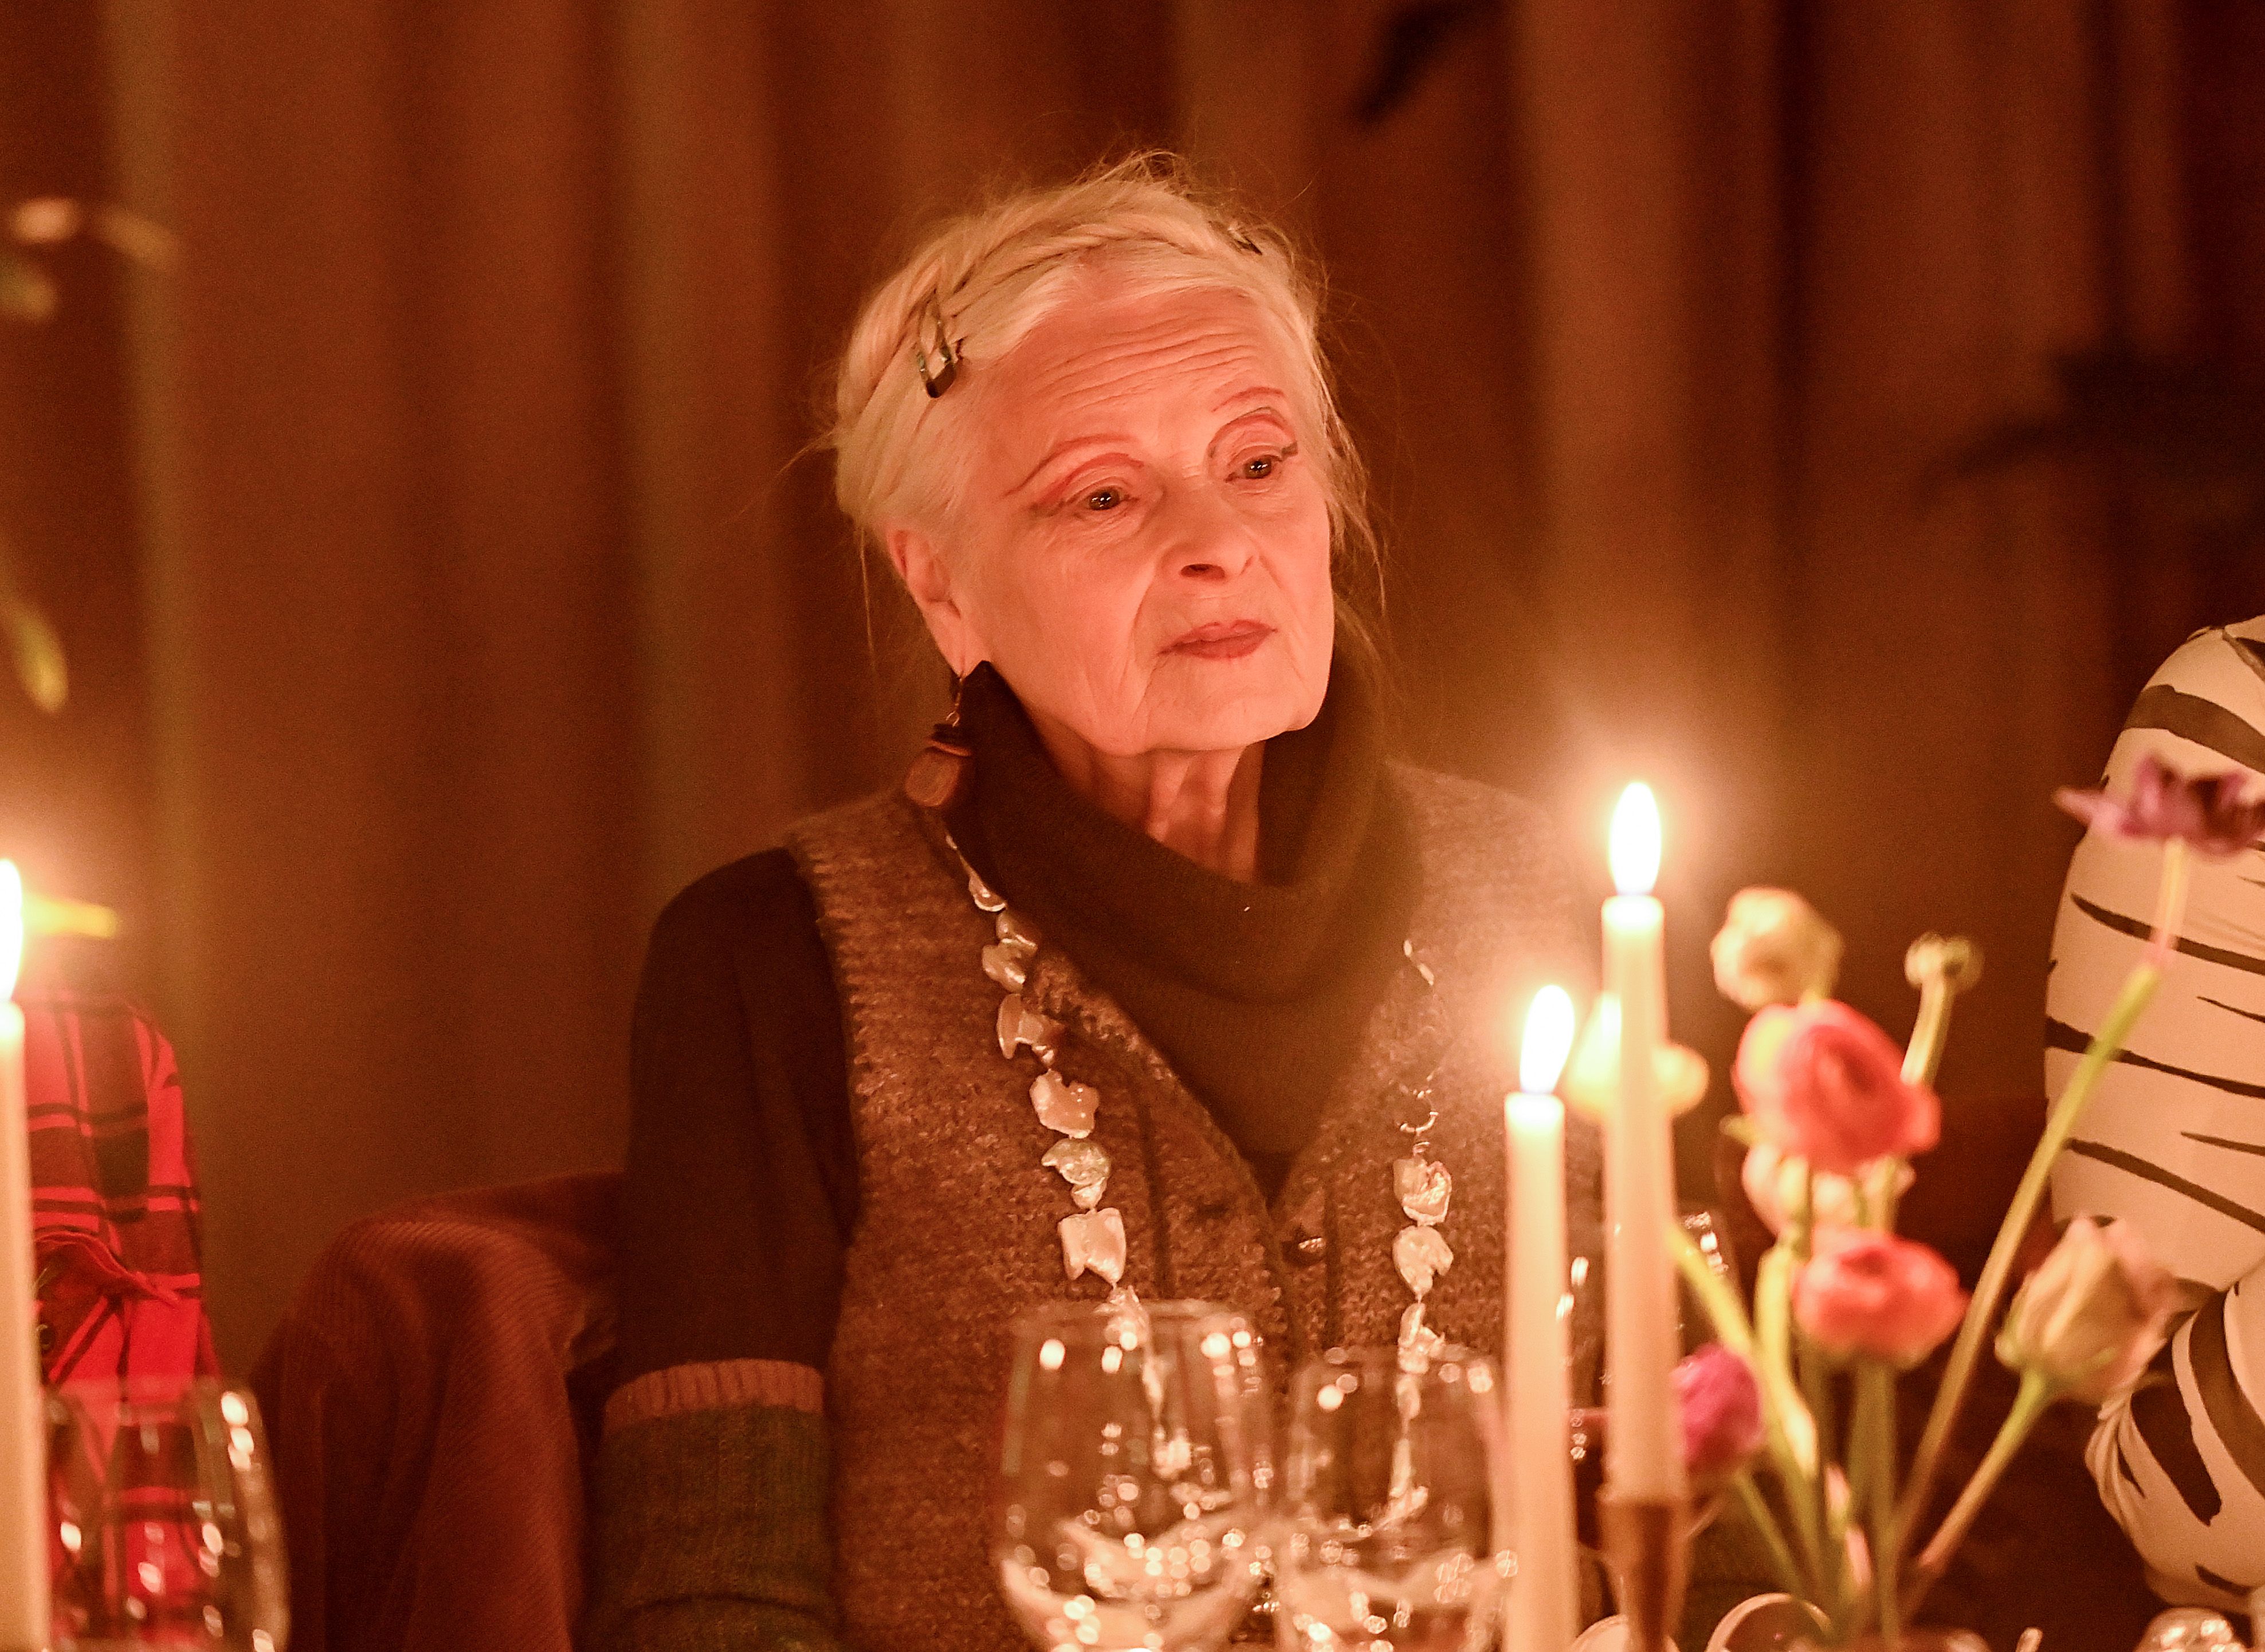 Dame Vivienne Westwood: The Fashion Designer On Climate Change